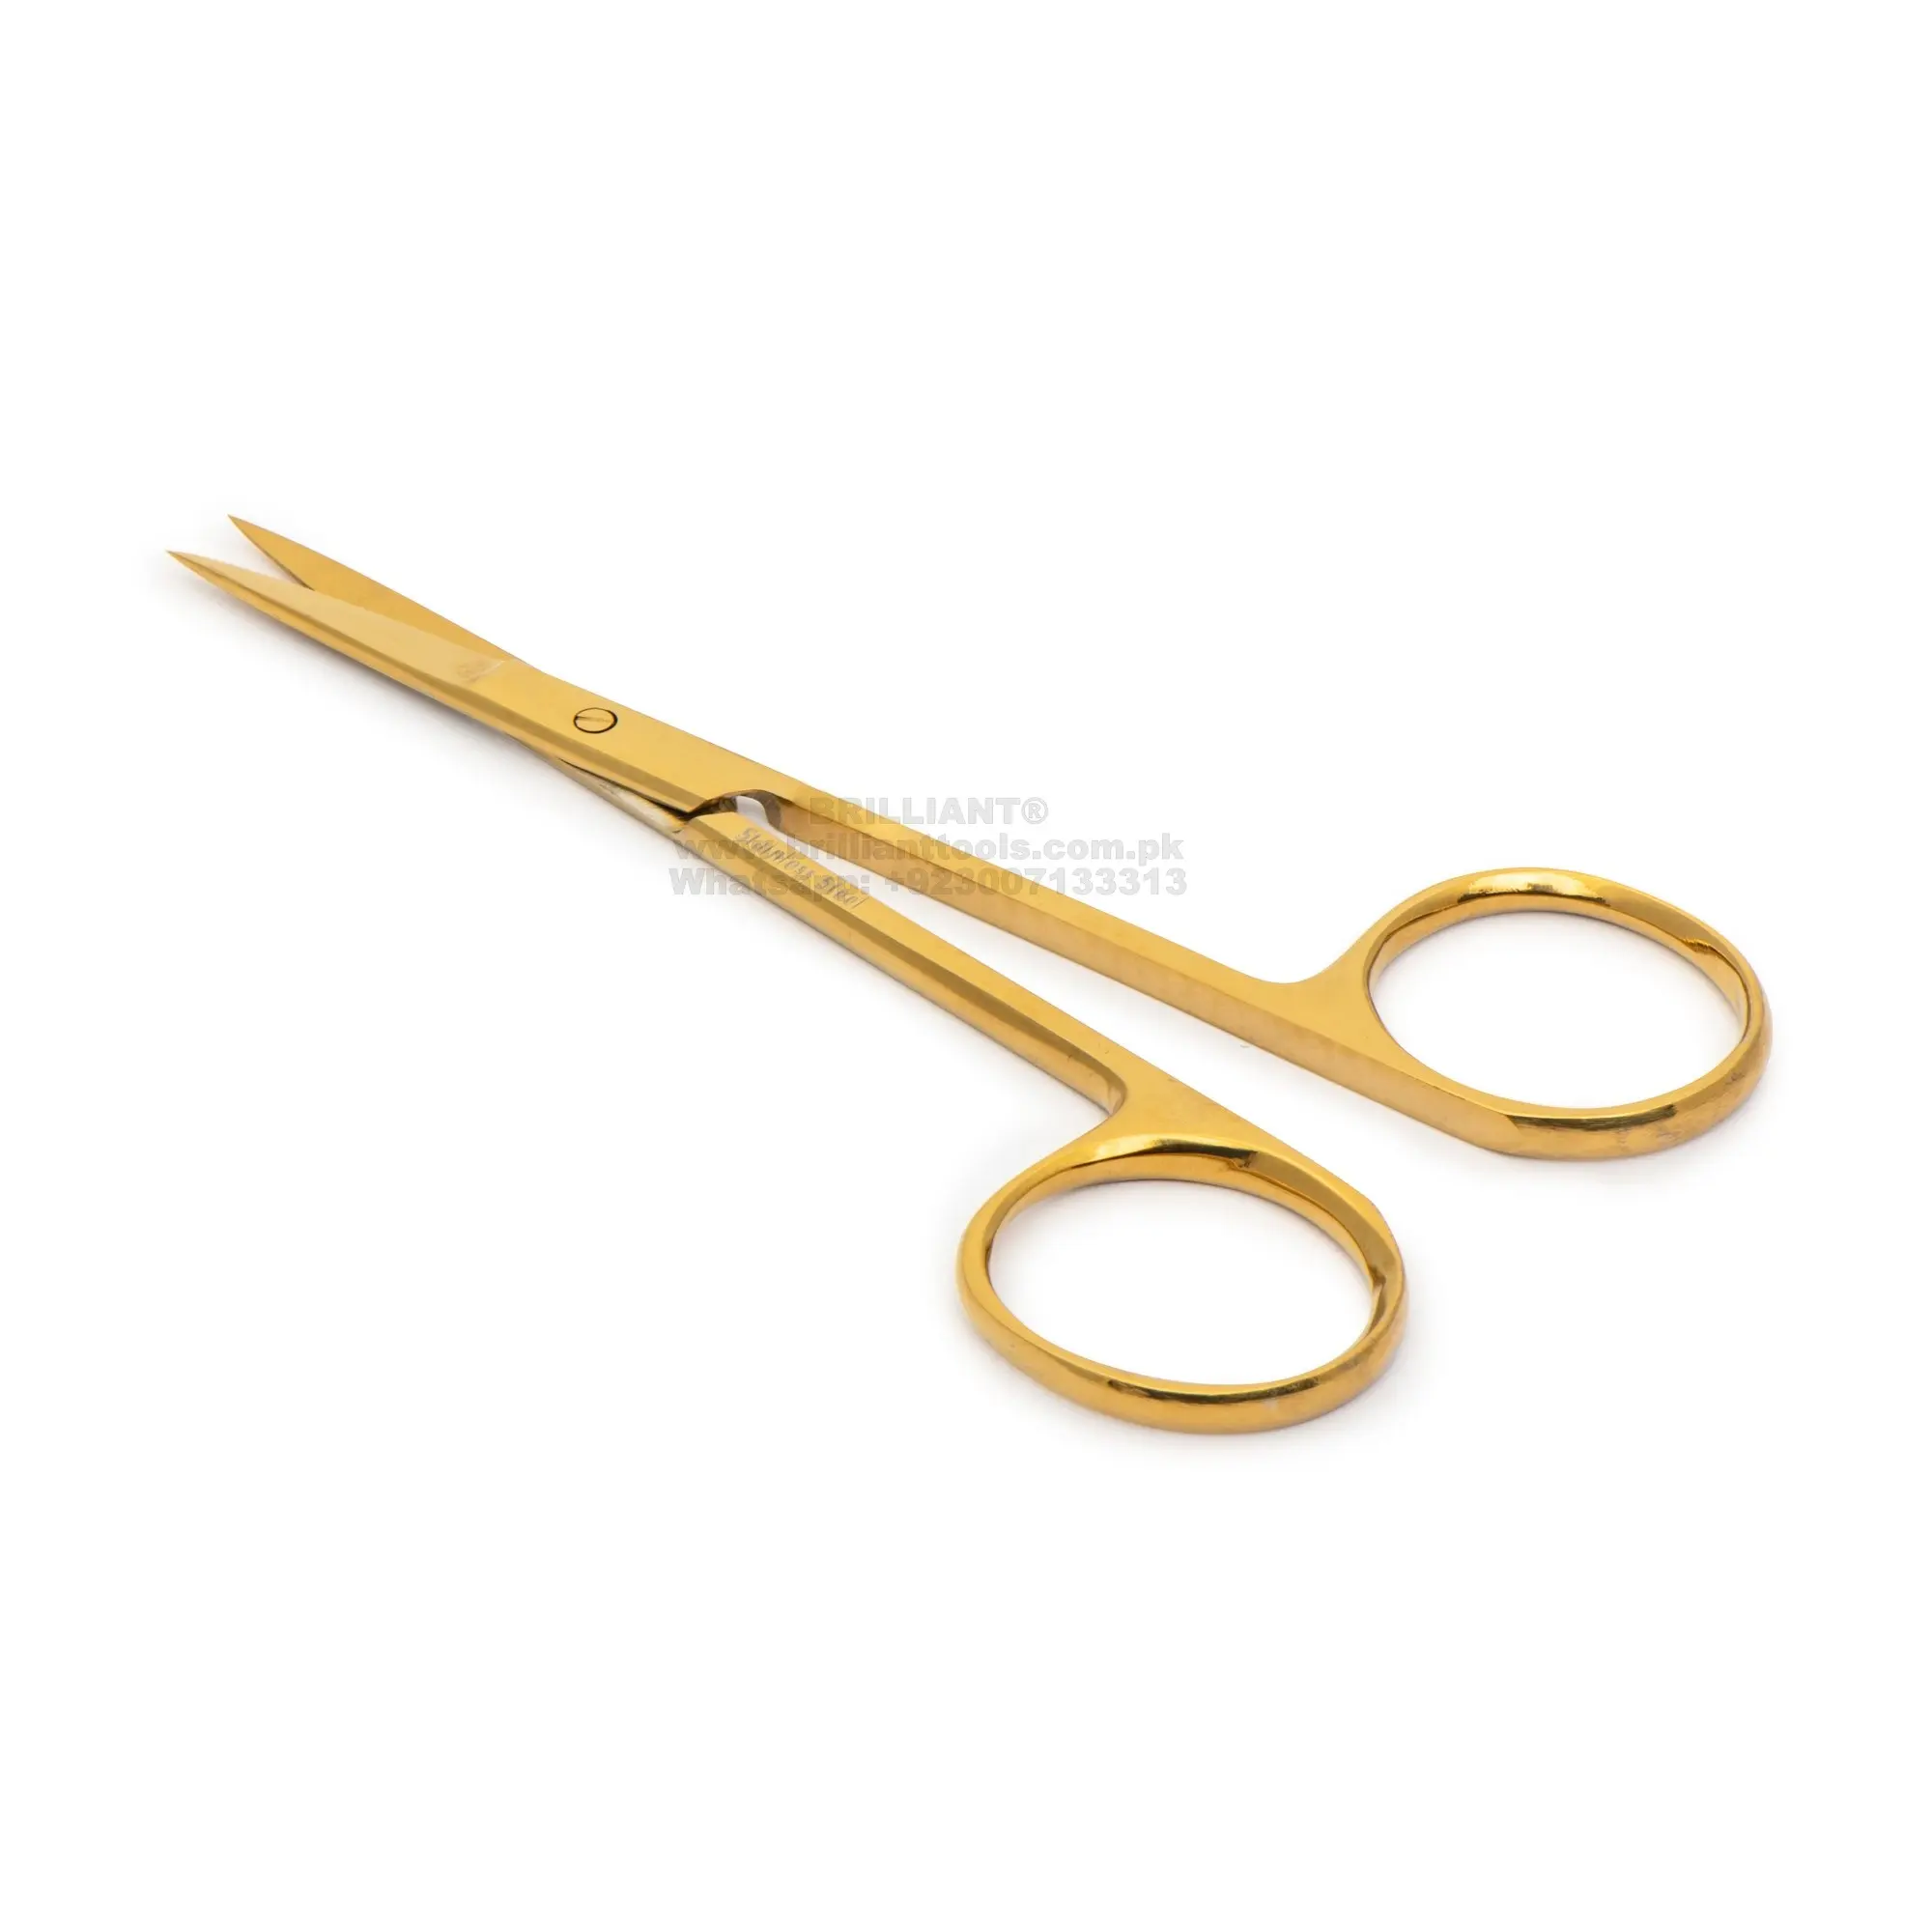 Premium Quality Gold Straight Blade Surgical Iris Scissor curved Stainless Steel Surgical Scissor supercut iris scissors